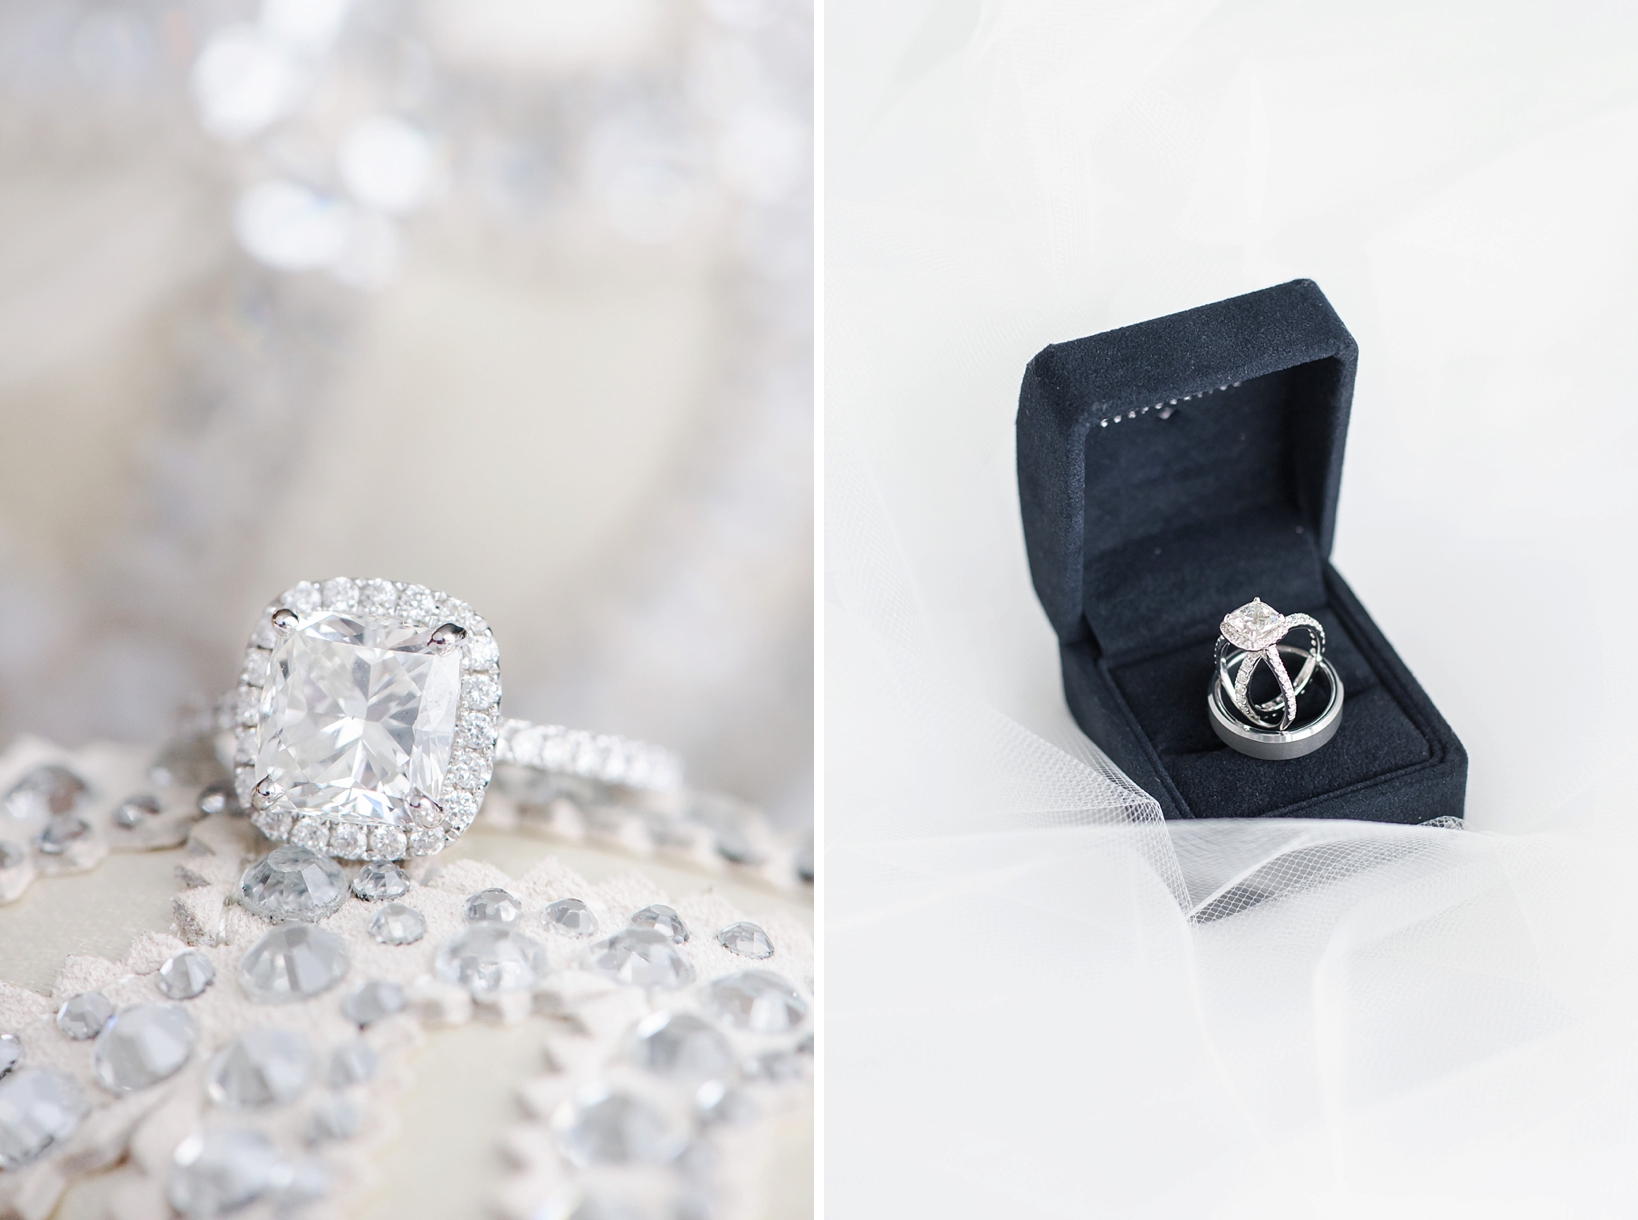 The wedding rings by Sarah & Ben Photography Tampa, Florida